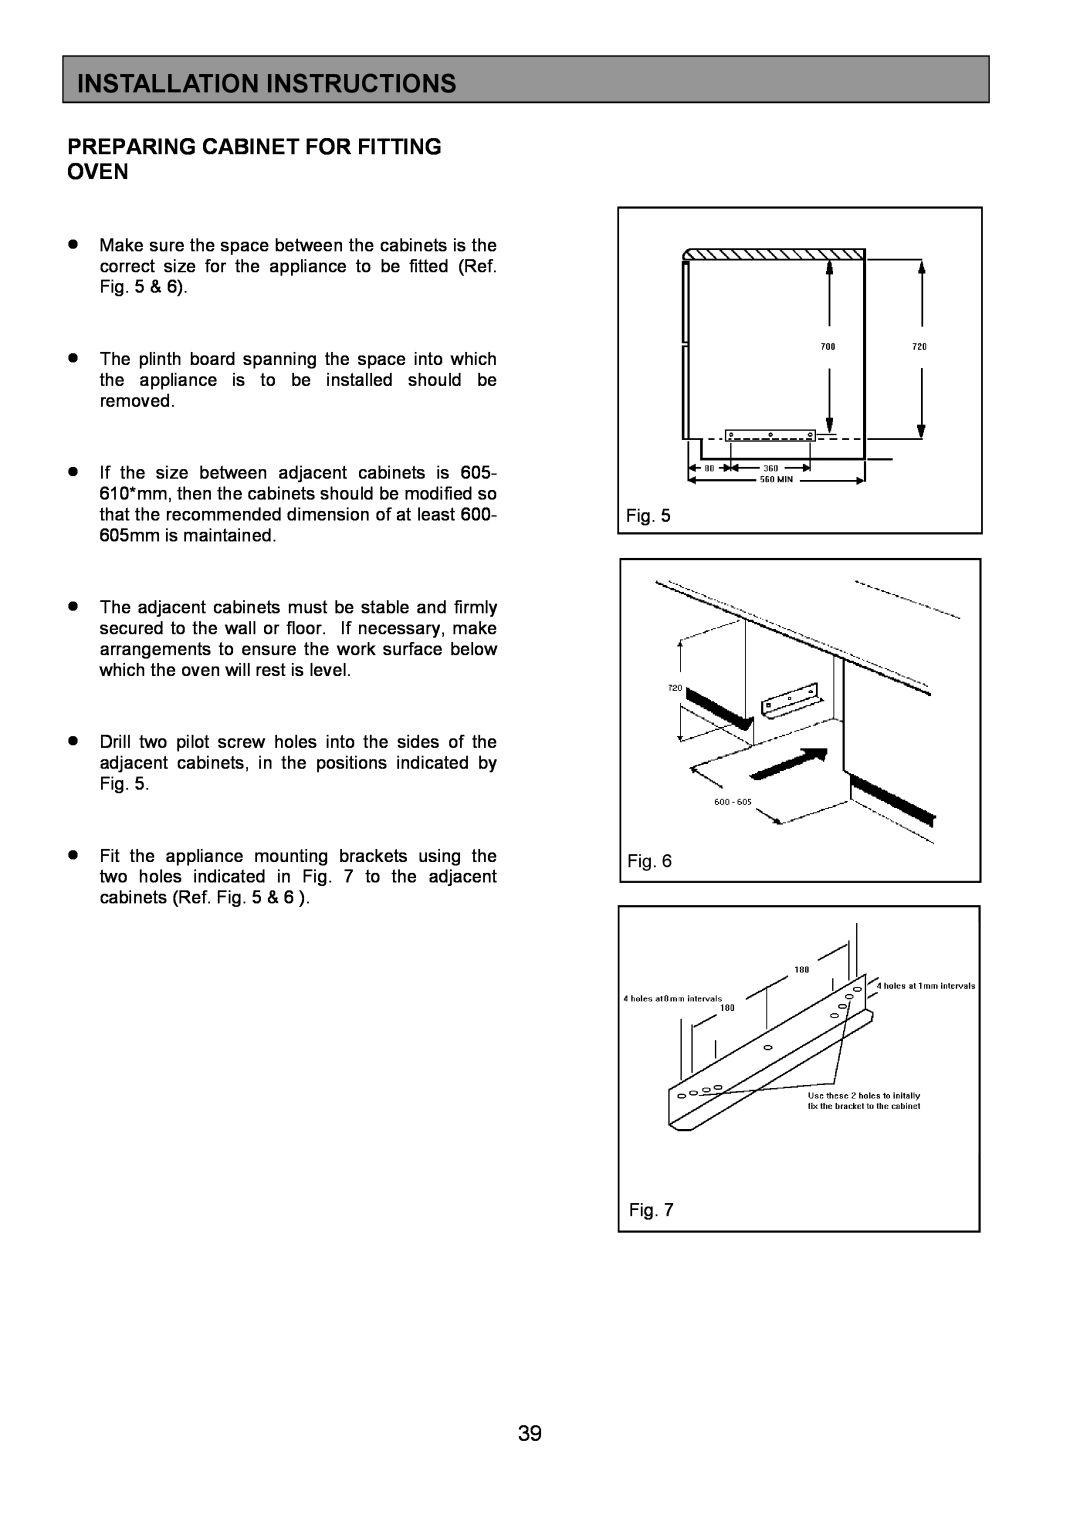 AEG 3210 BU installation instructions Preparing Cabinet For Fitting Oven, Installation Instructions 